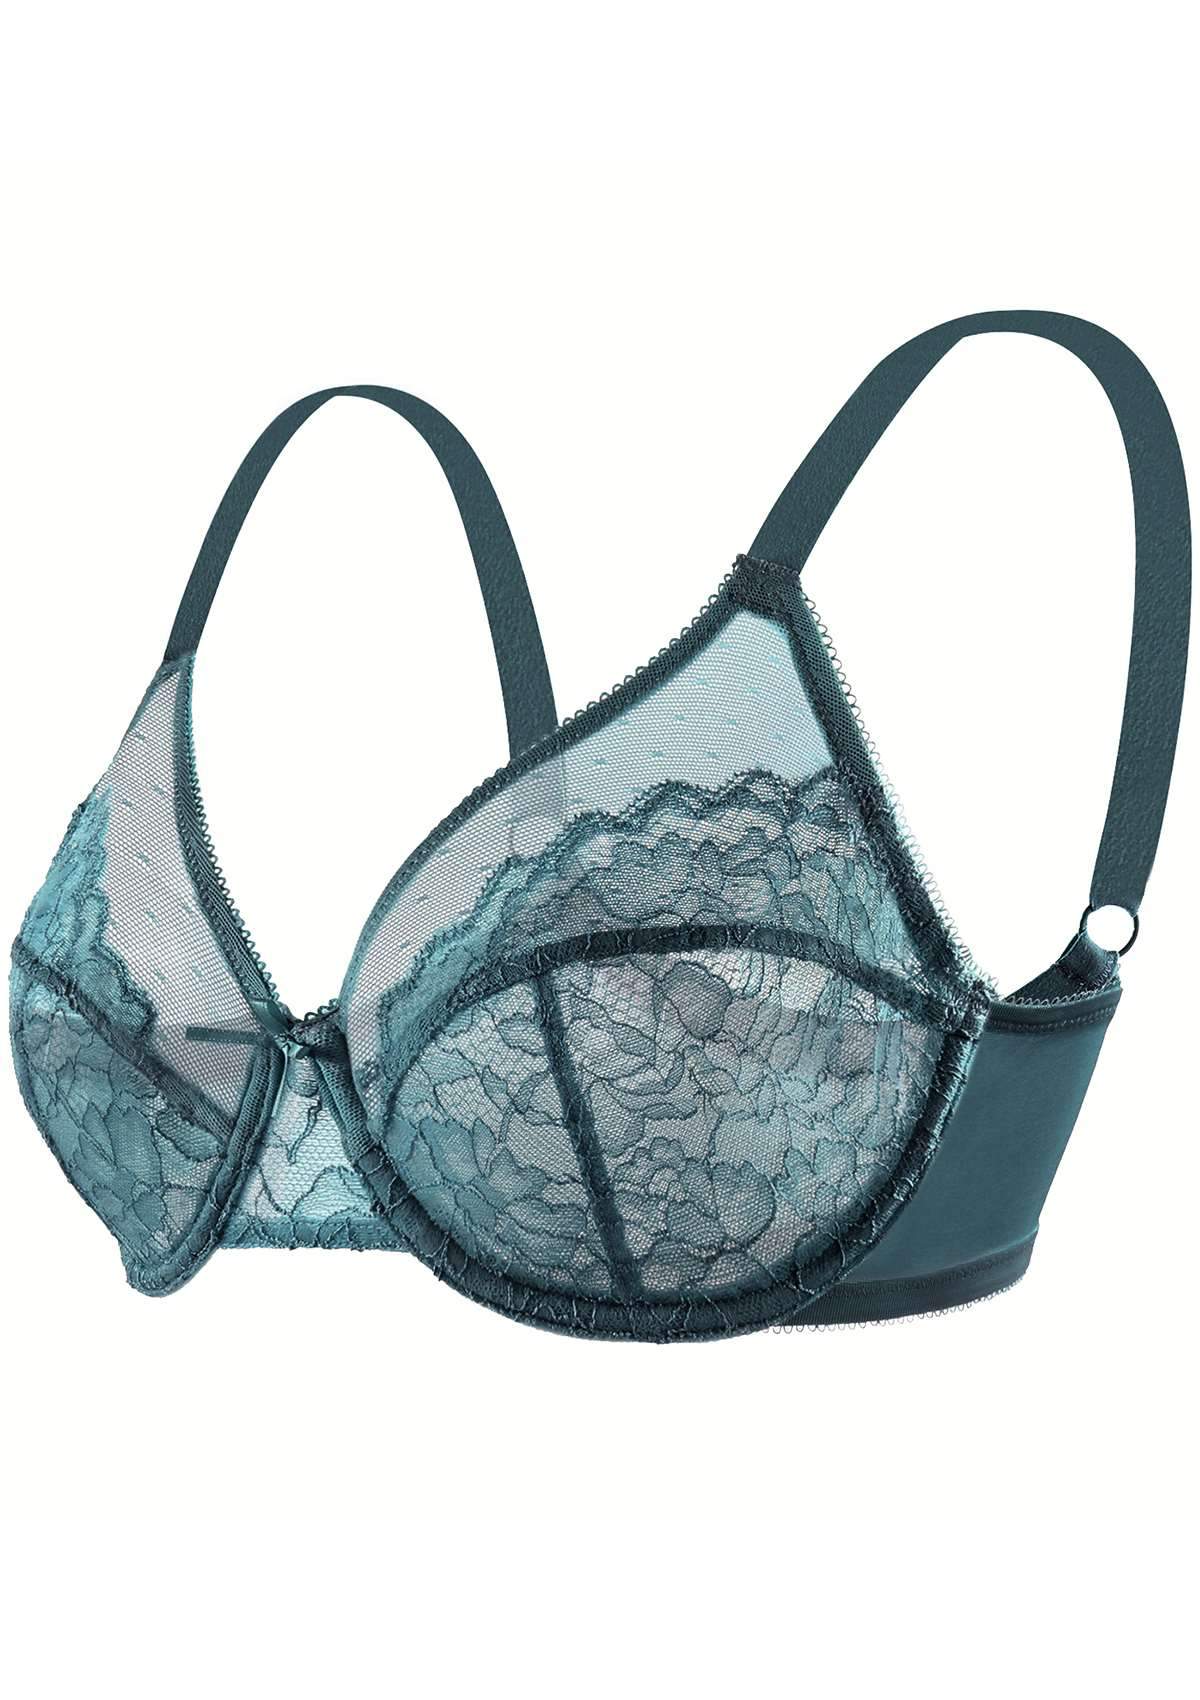 HSIA Enchante Bra And Underwear Set: Sexy, Comfortable See-Through Bra - Balsam Blue / 34 / DDD/F